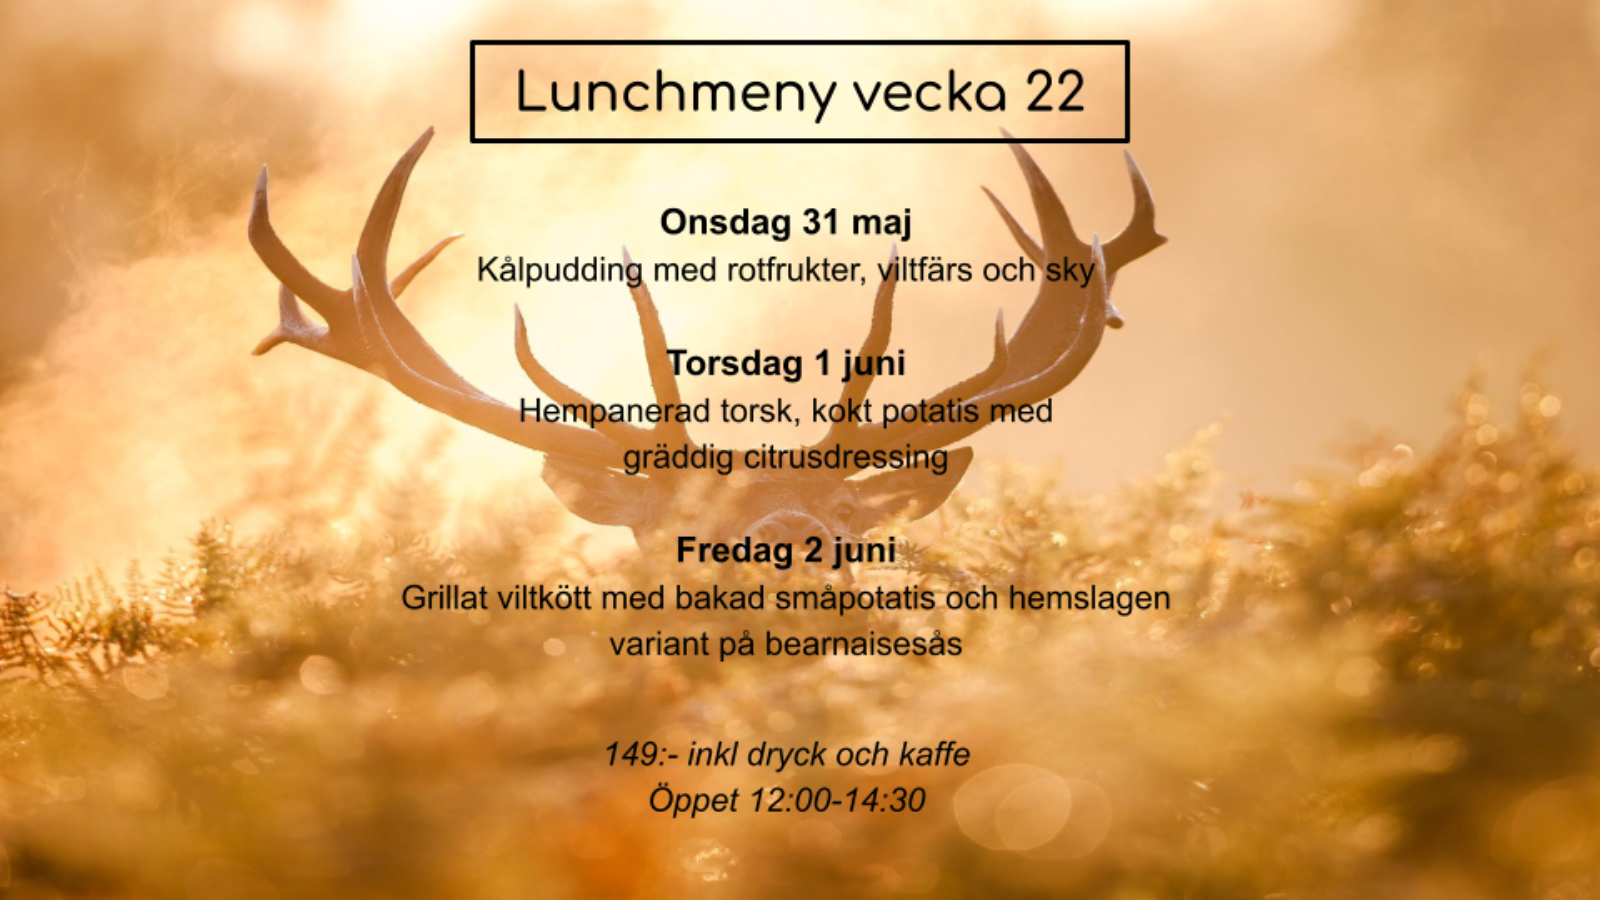 Lunchmeny v22